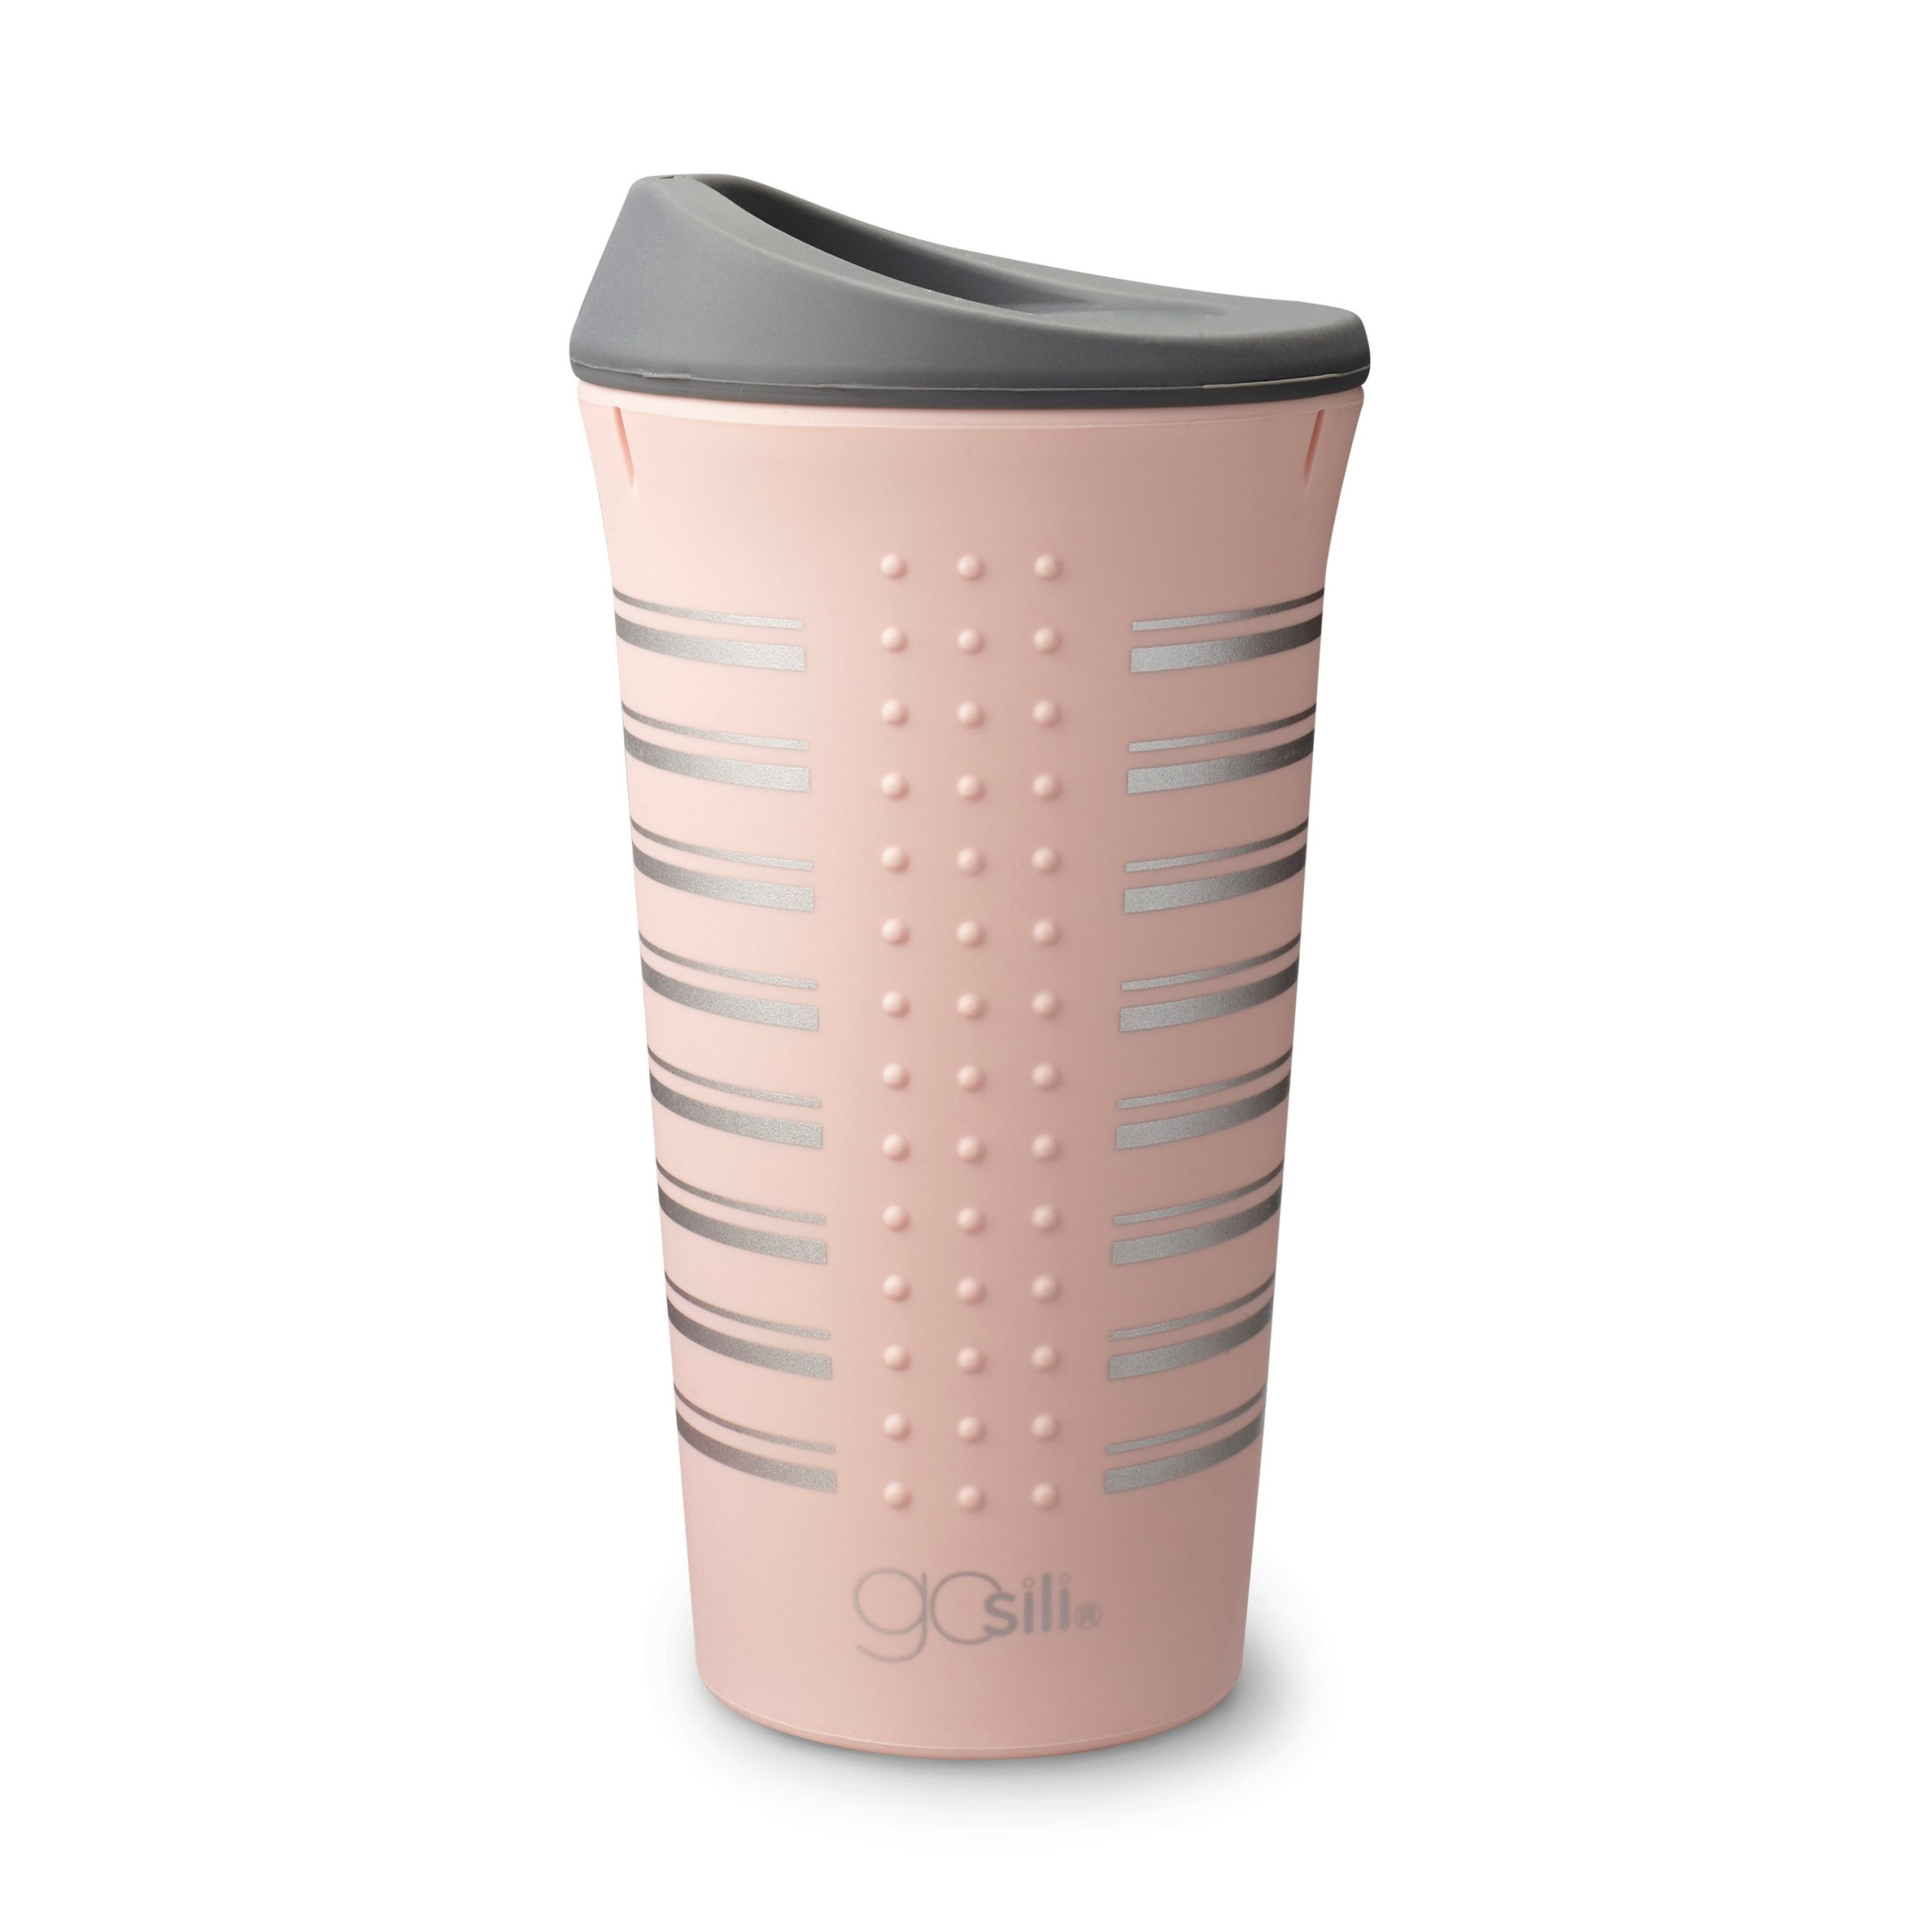 Gosili Travel Mug Designs Pink from Gimme the Good Stuff